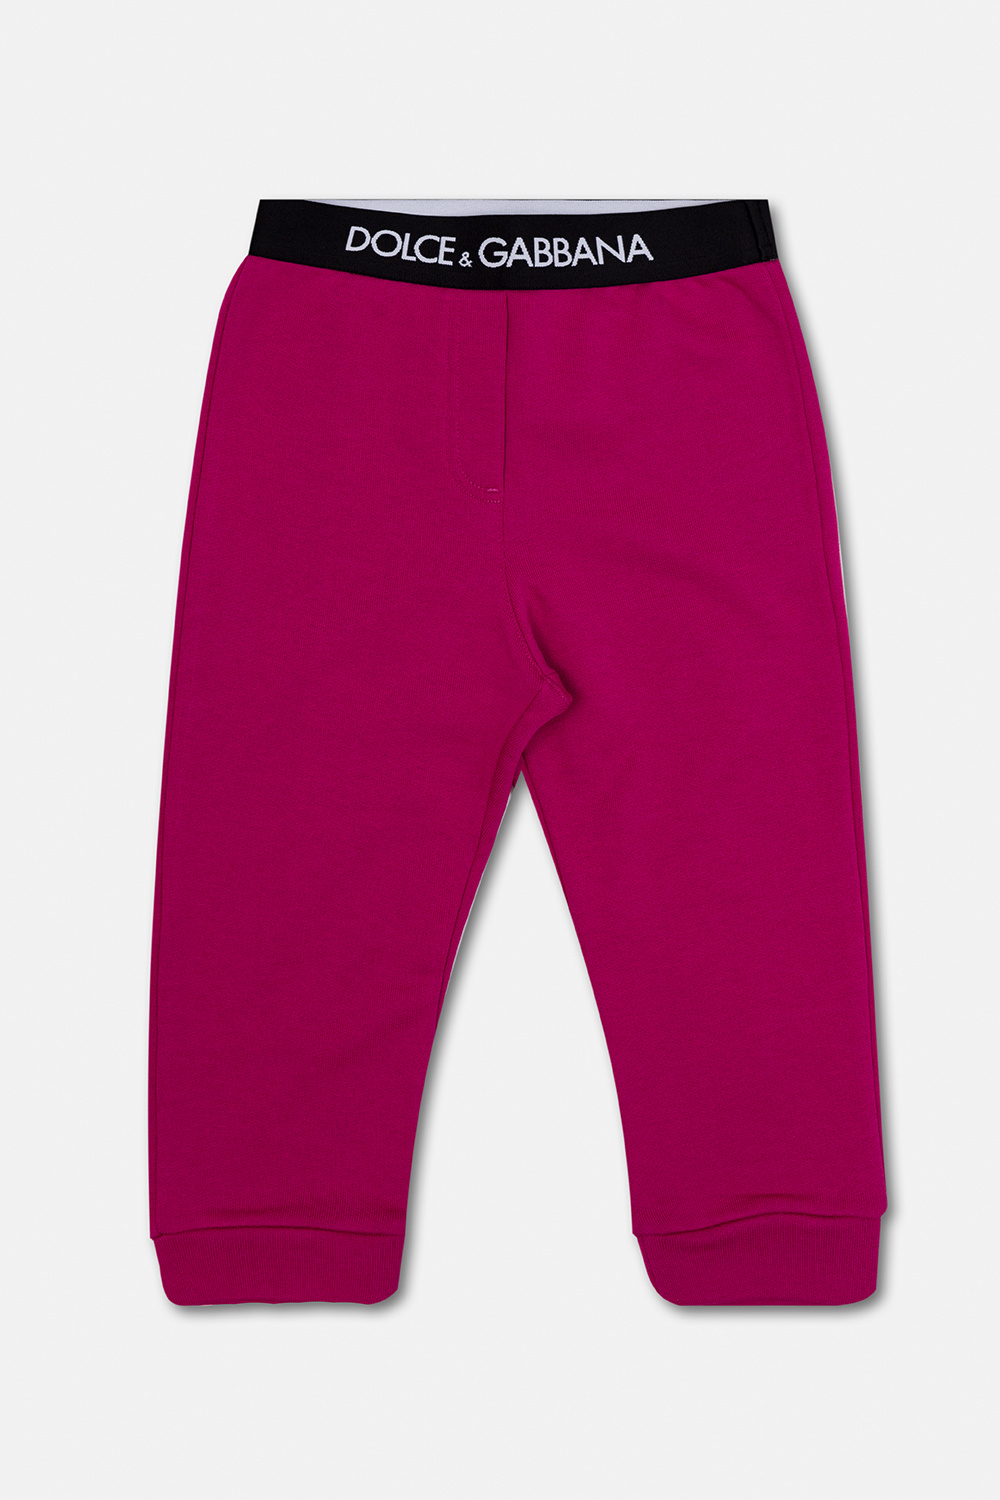 Dolce & Gabbana Kids Cotton trousers Bianco with logo